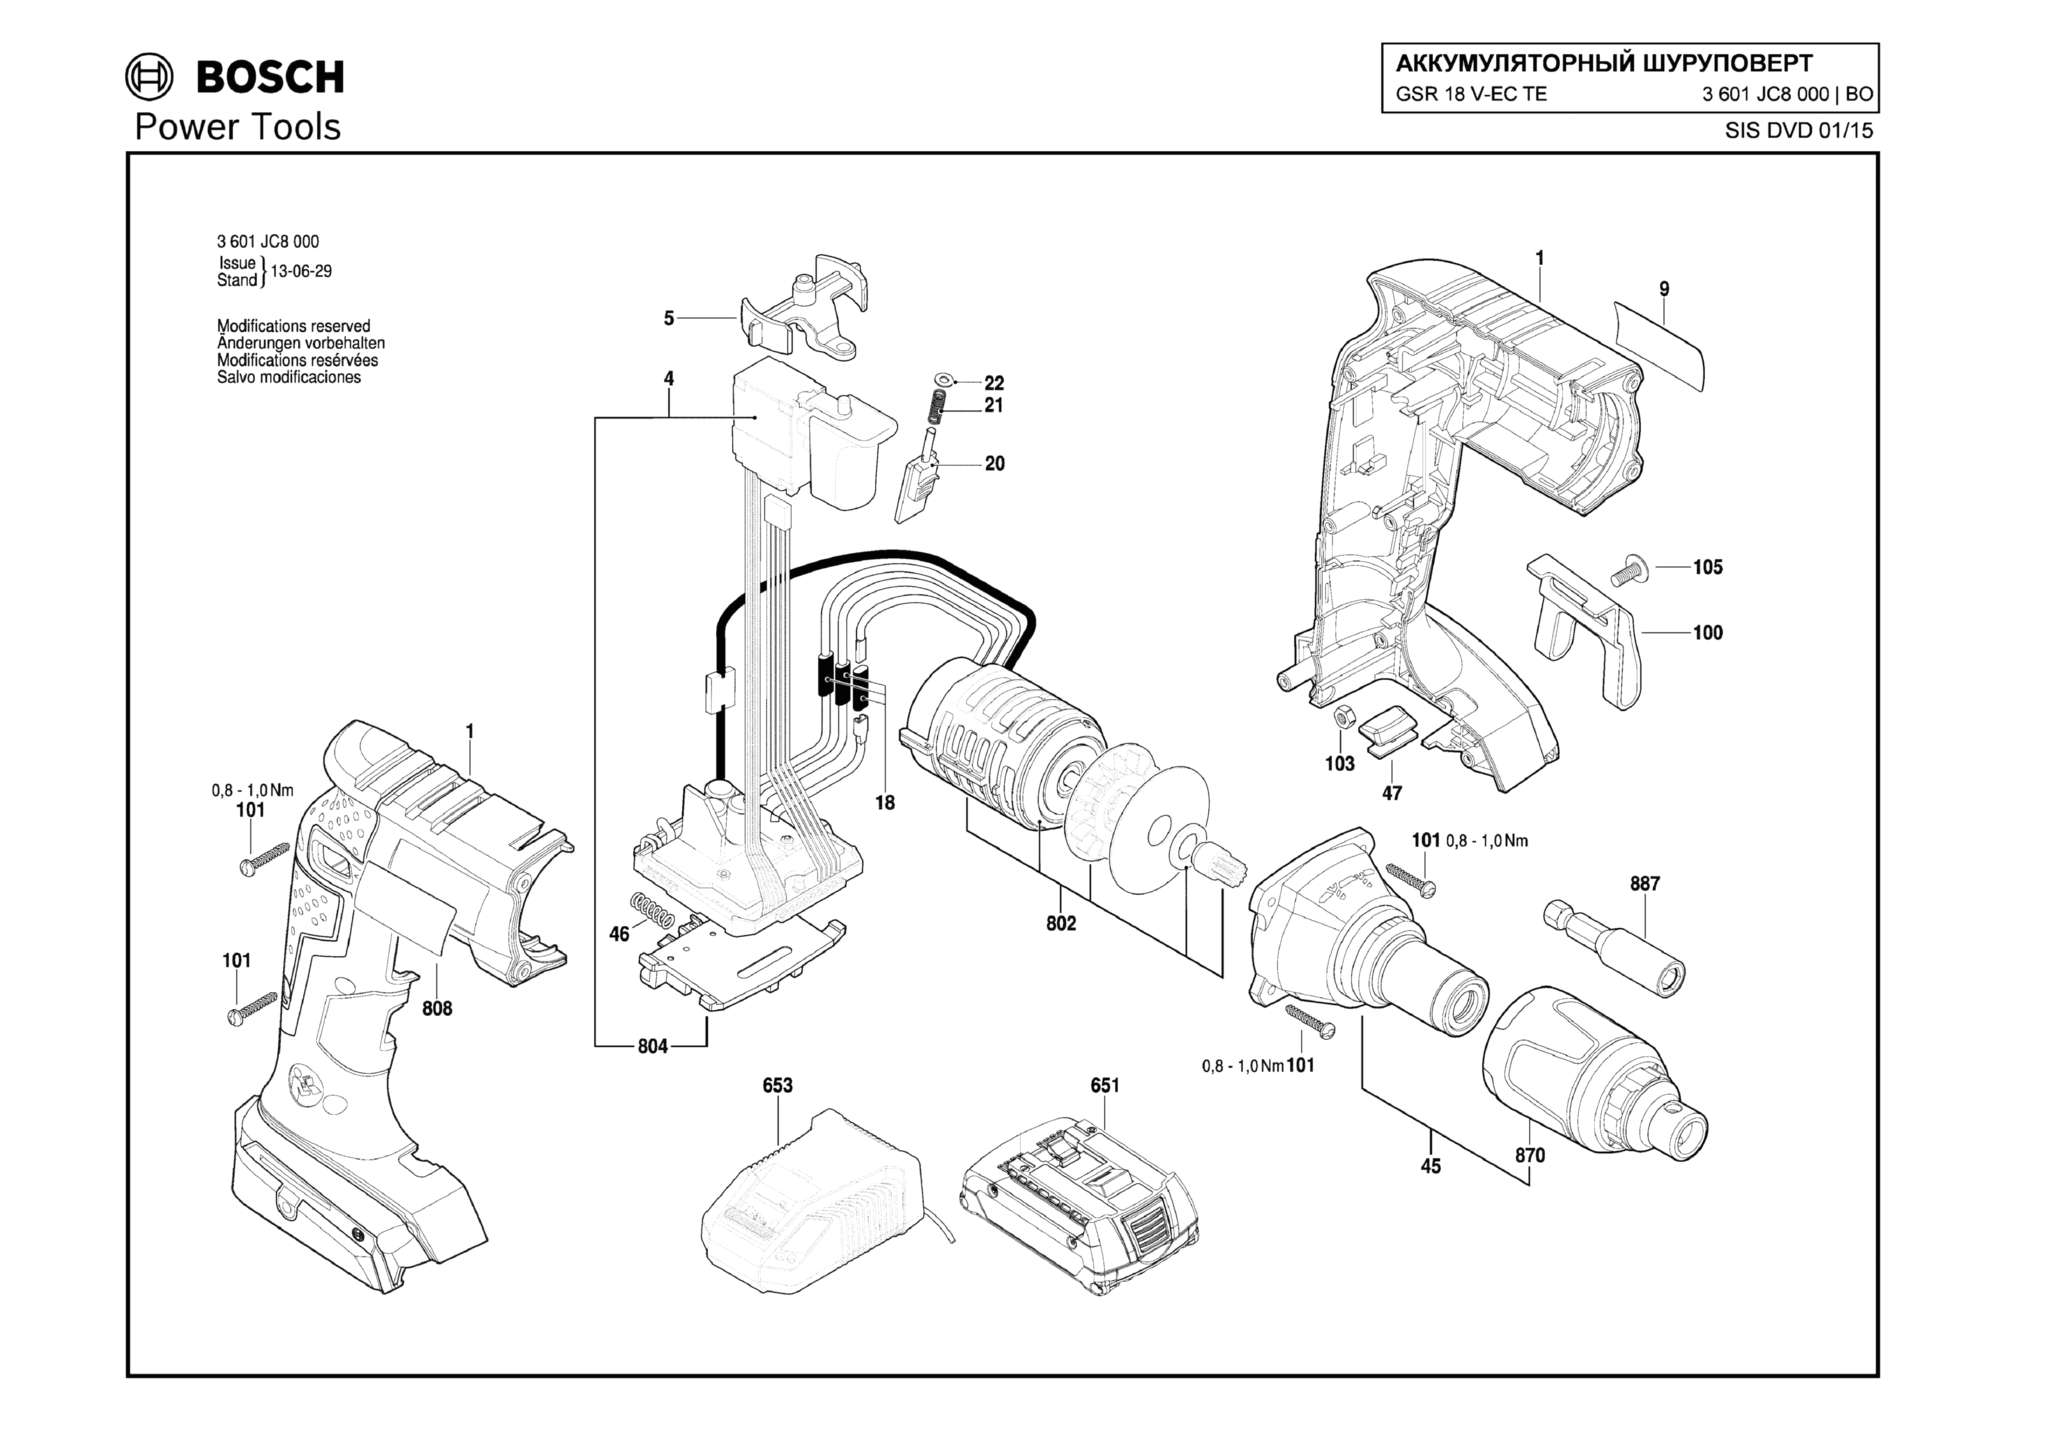 Запчасти, схема и деталировка Bosch GSR 18 V-EC TE (ТИП 3601JC8000)